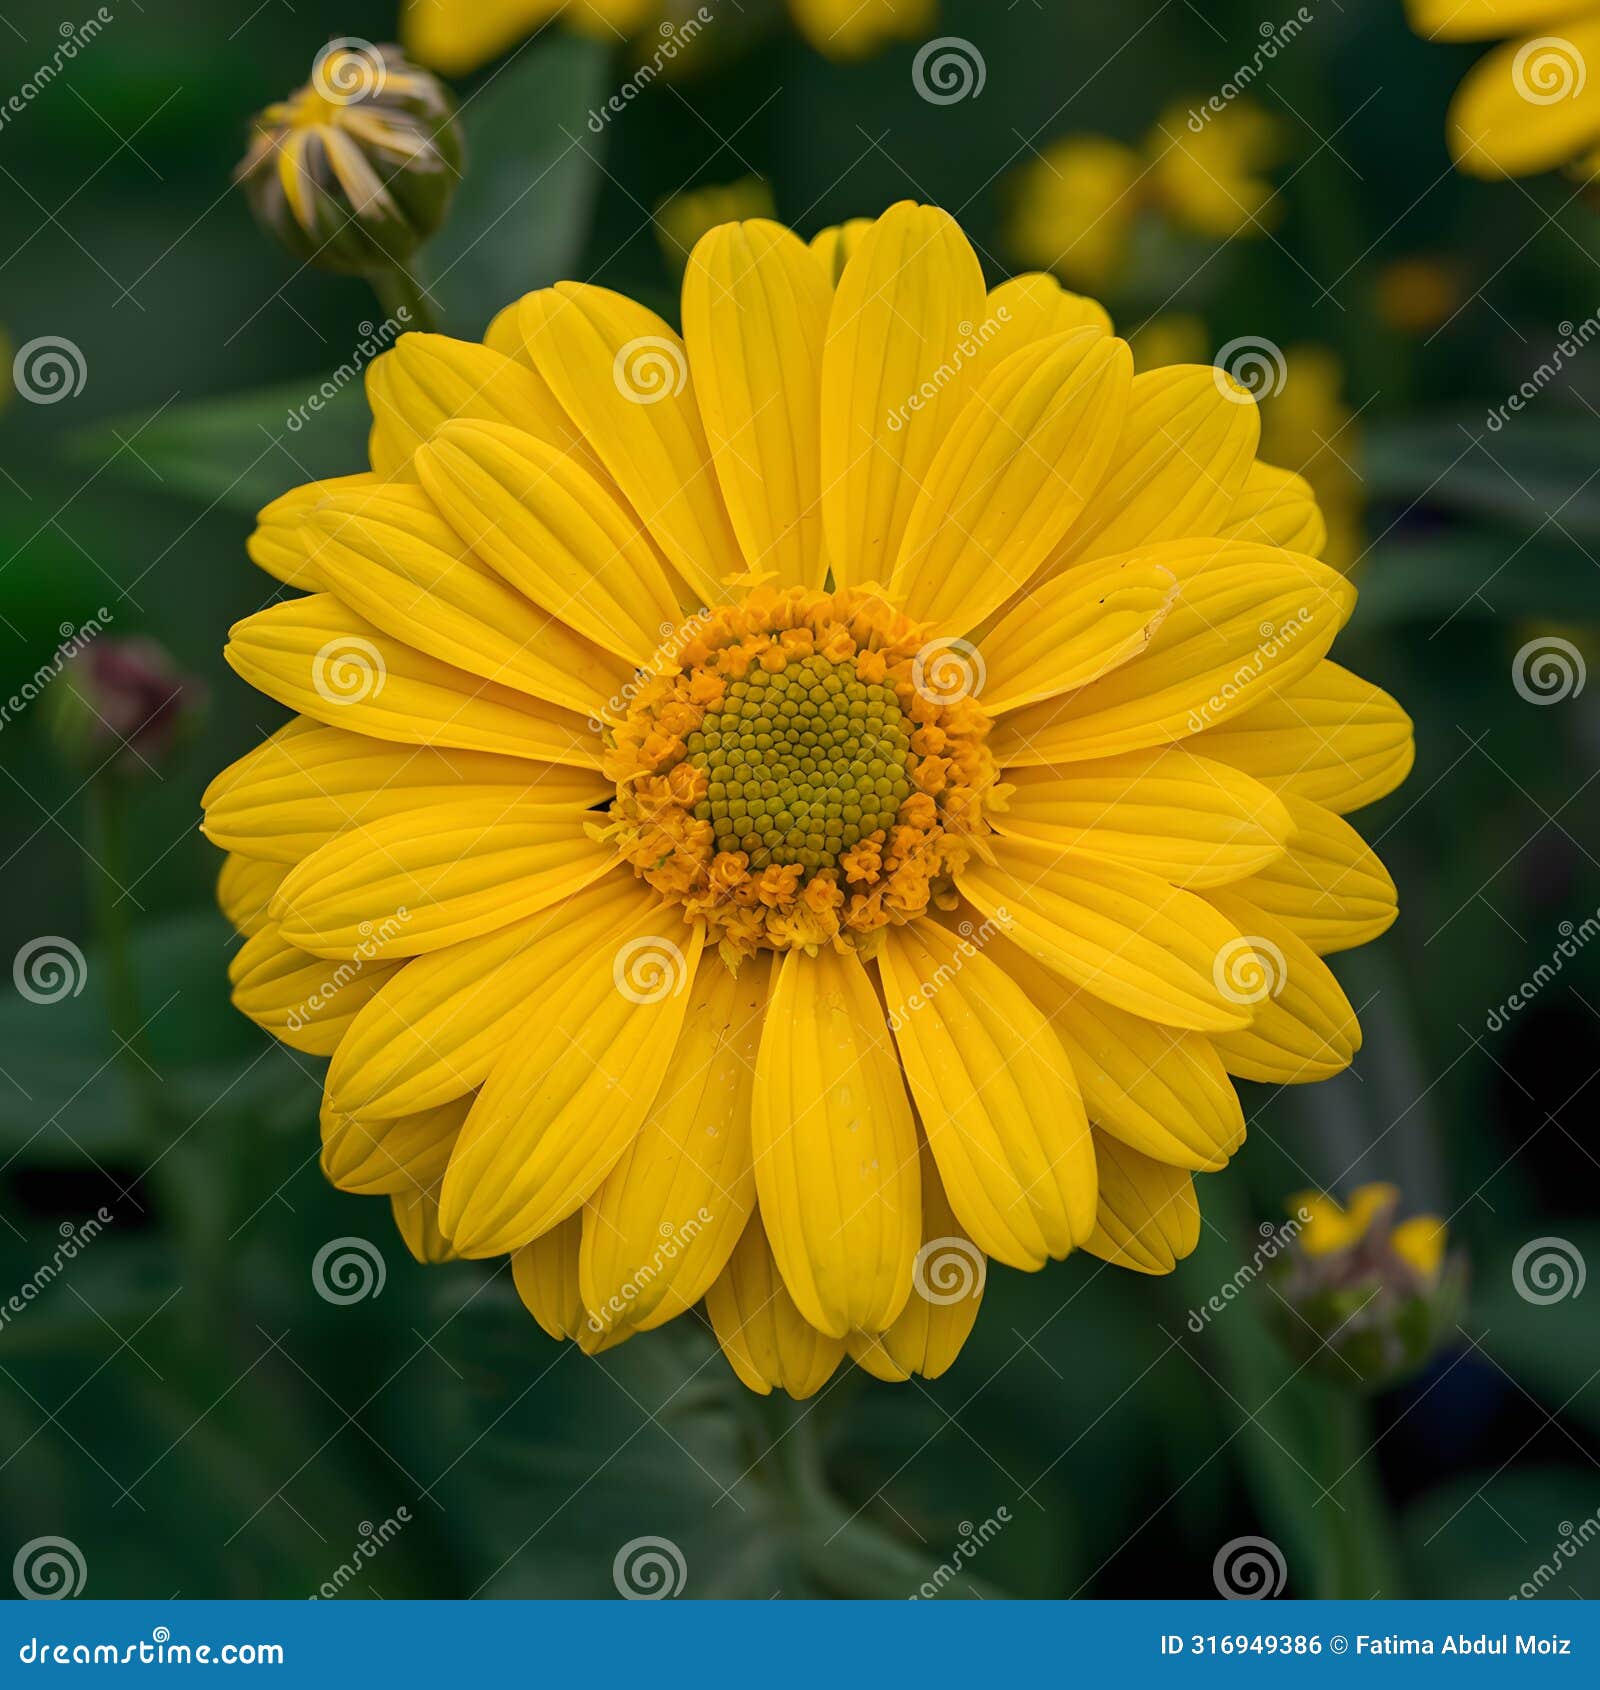 lonely beauty vibrant yellow flower graces the garden landscape